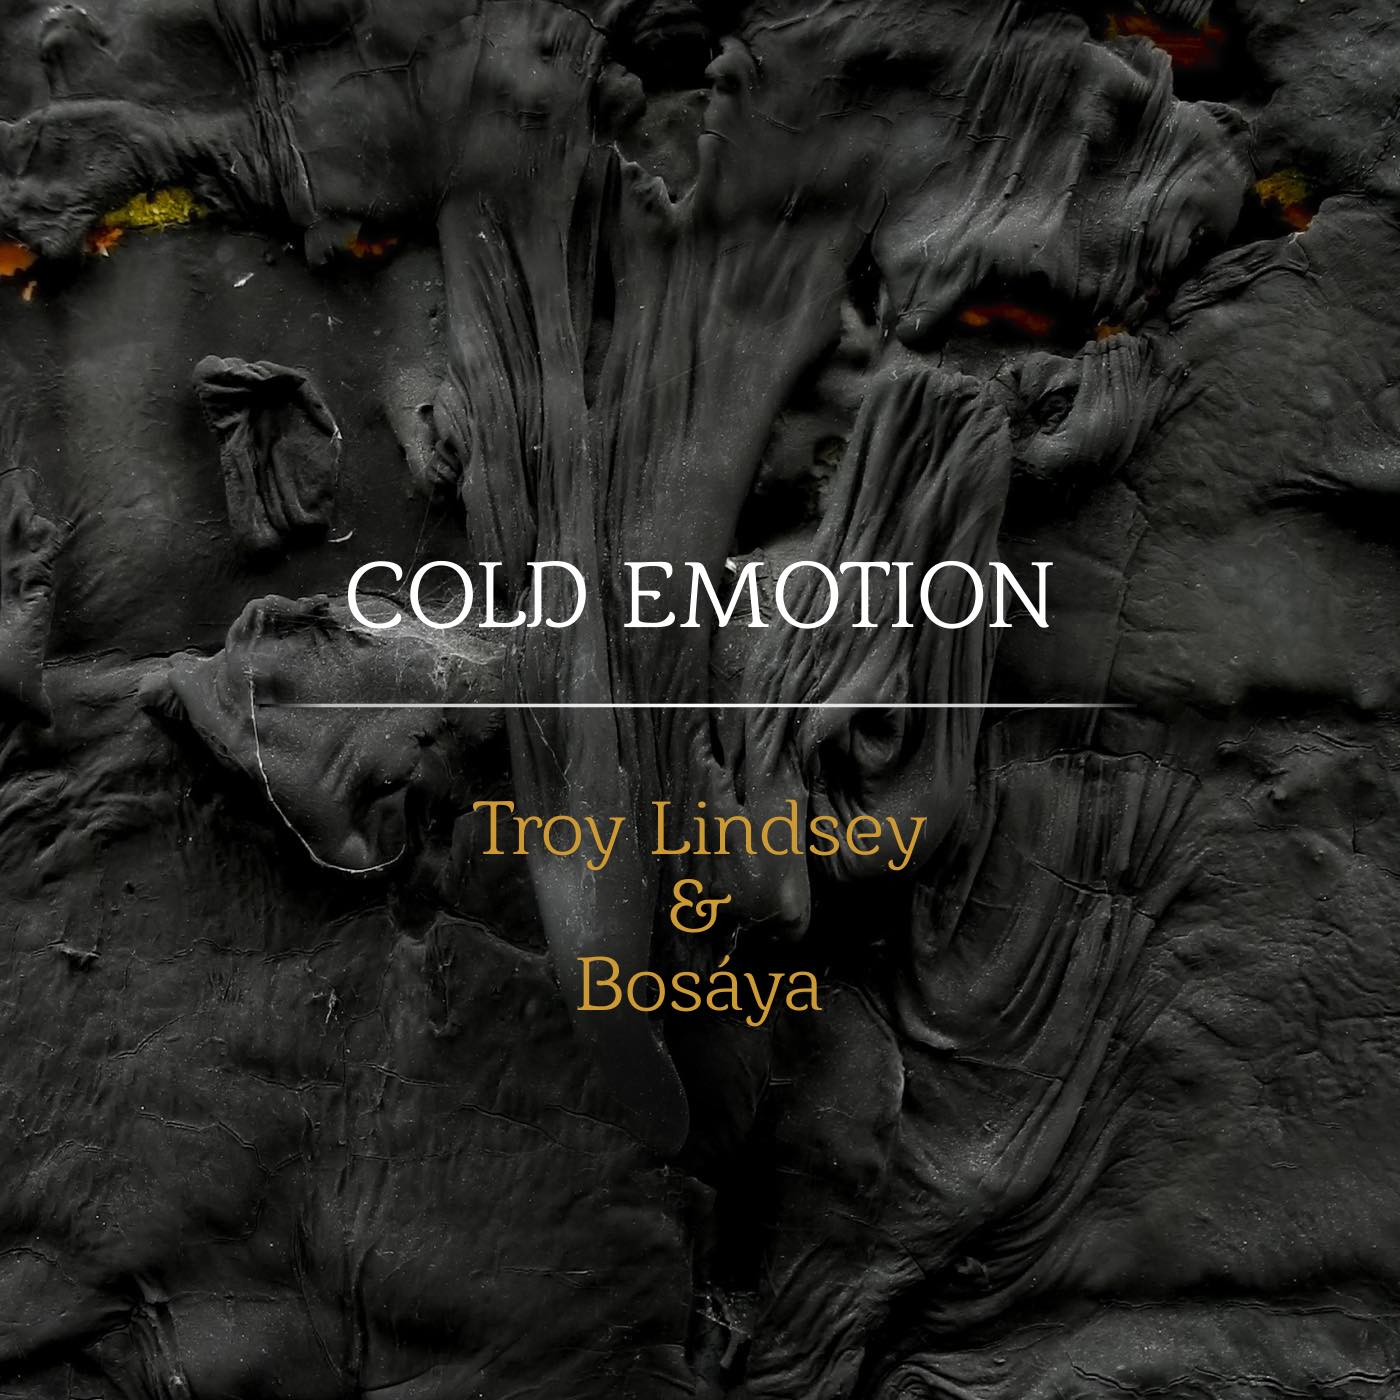  Troy Lindsey & Bosaya – “Outlaw Love”